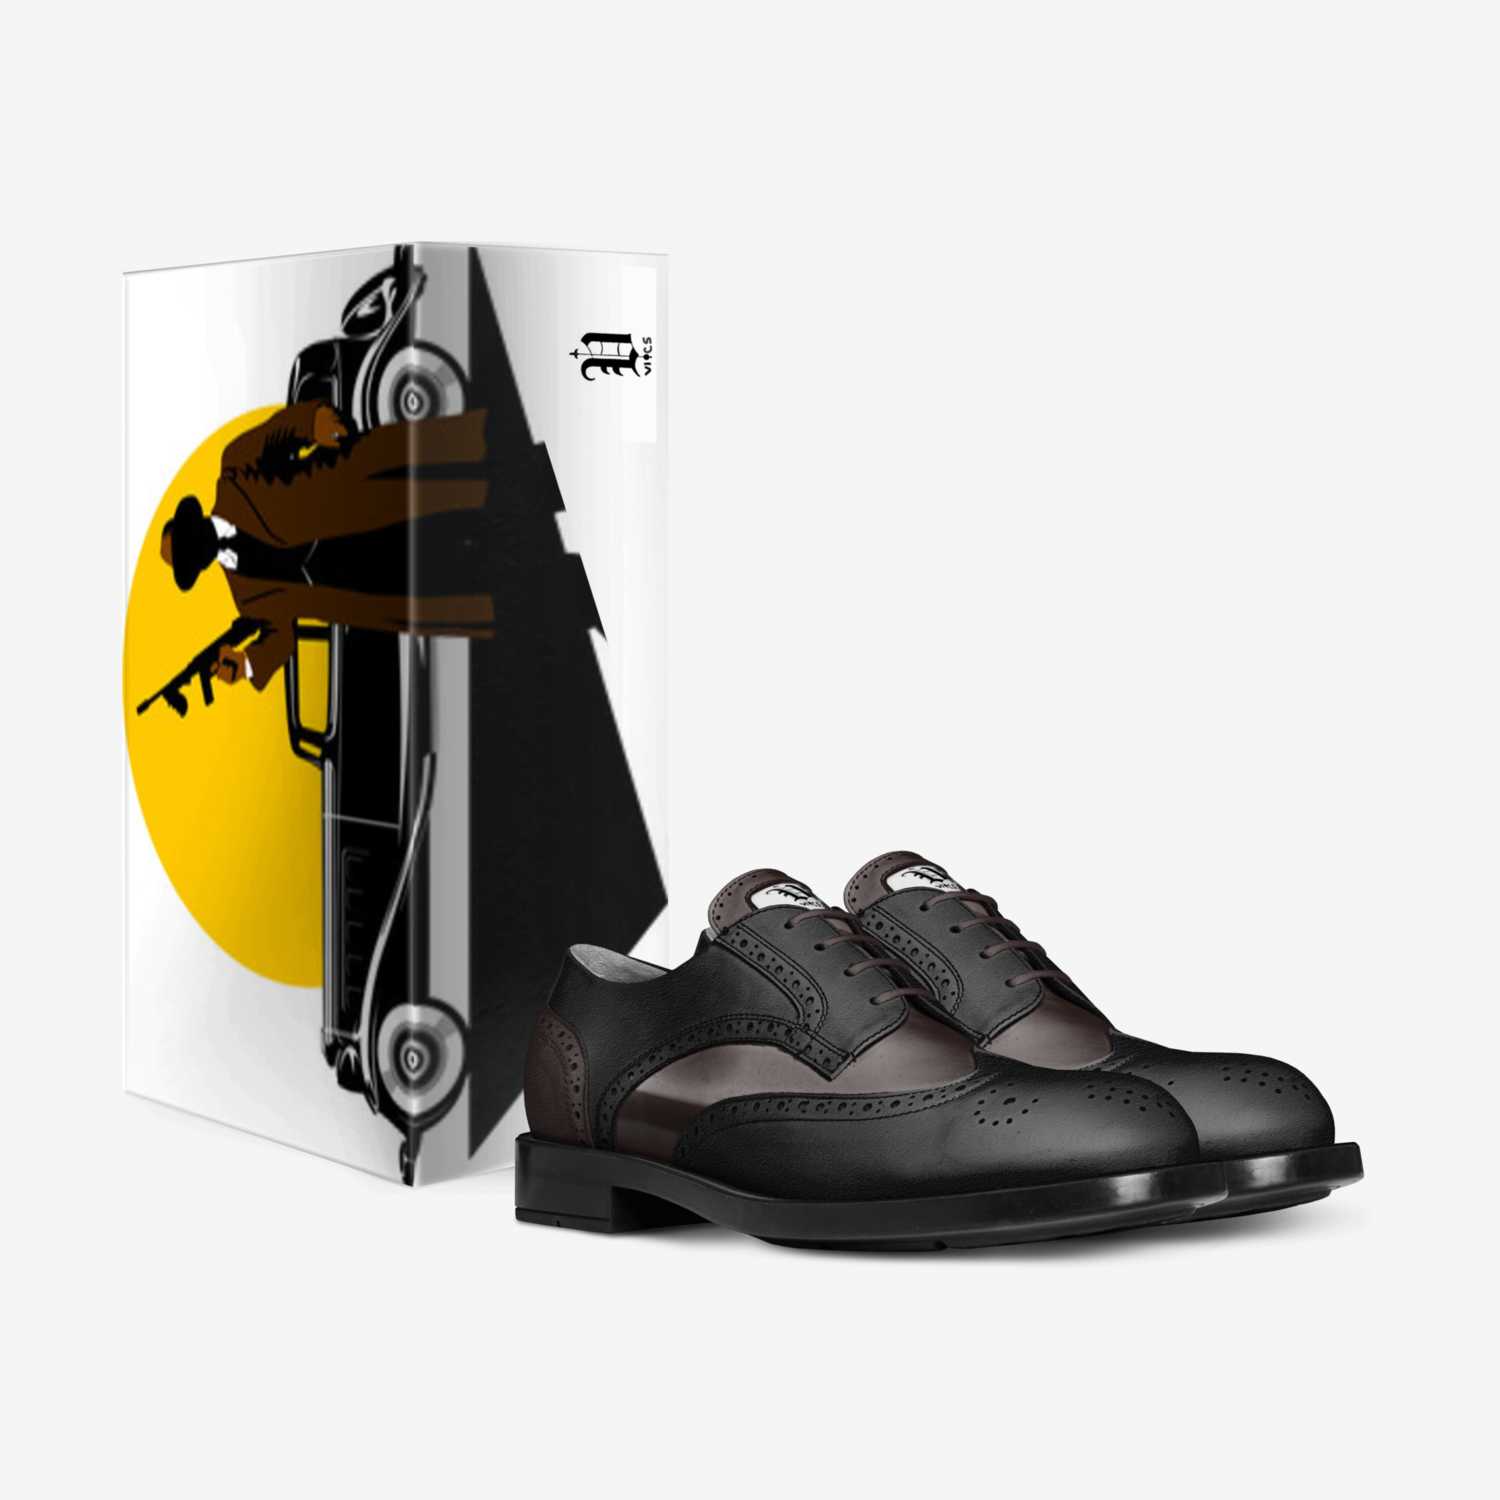 vics mafia custom made in Italy shoes by Brayden Murphy | Box view